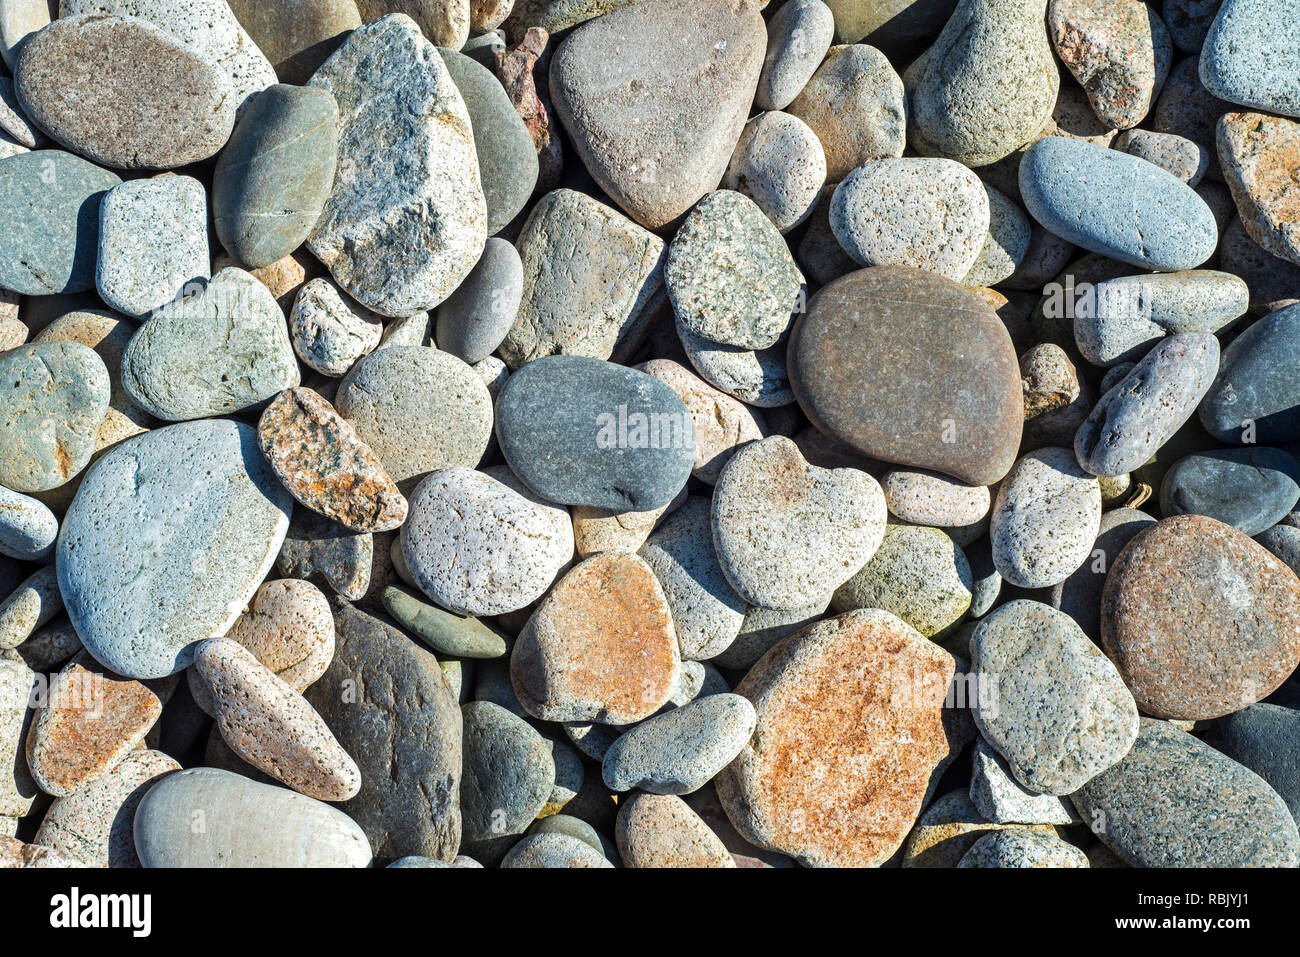 Pebbles on a shingle beach / rocky beach / pebble beach in Normandy, France Stock Photo